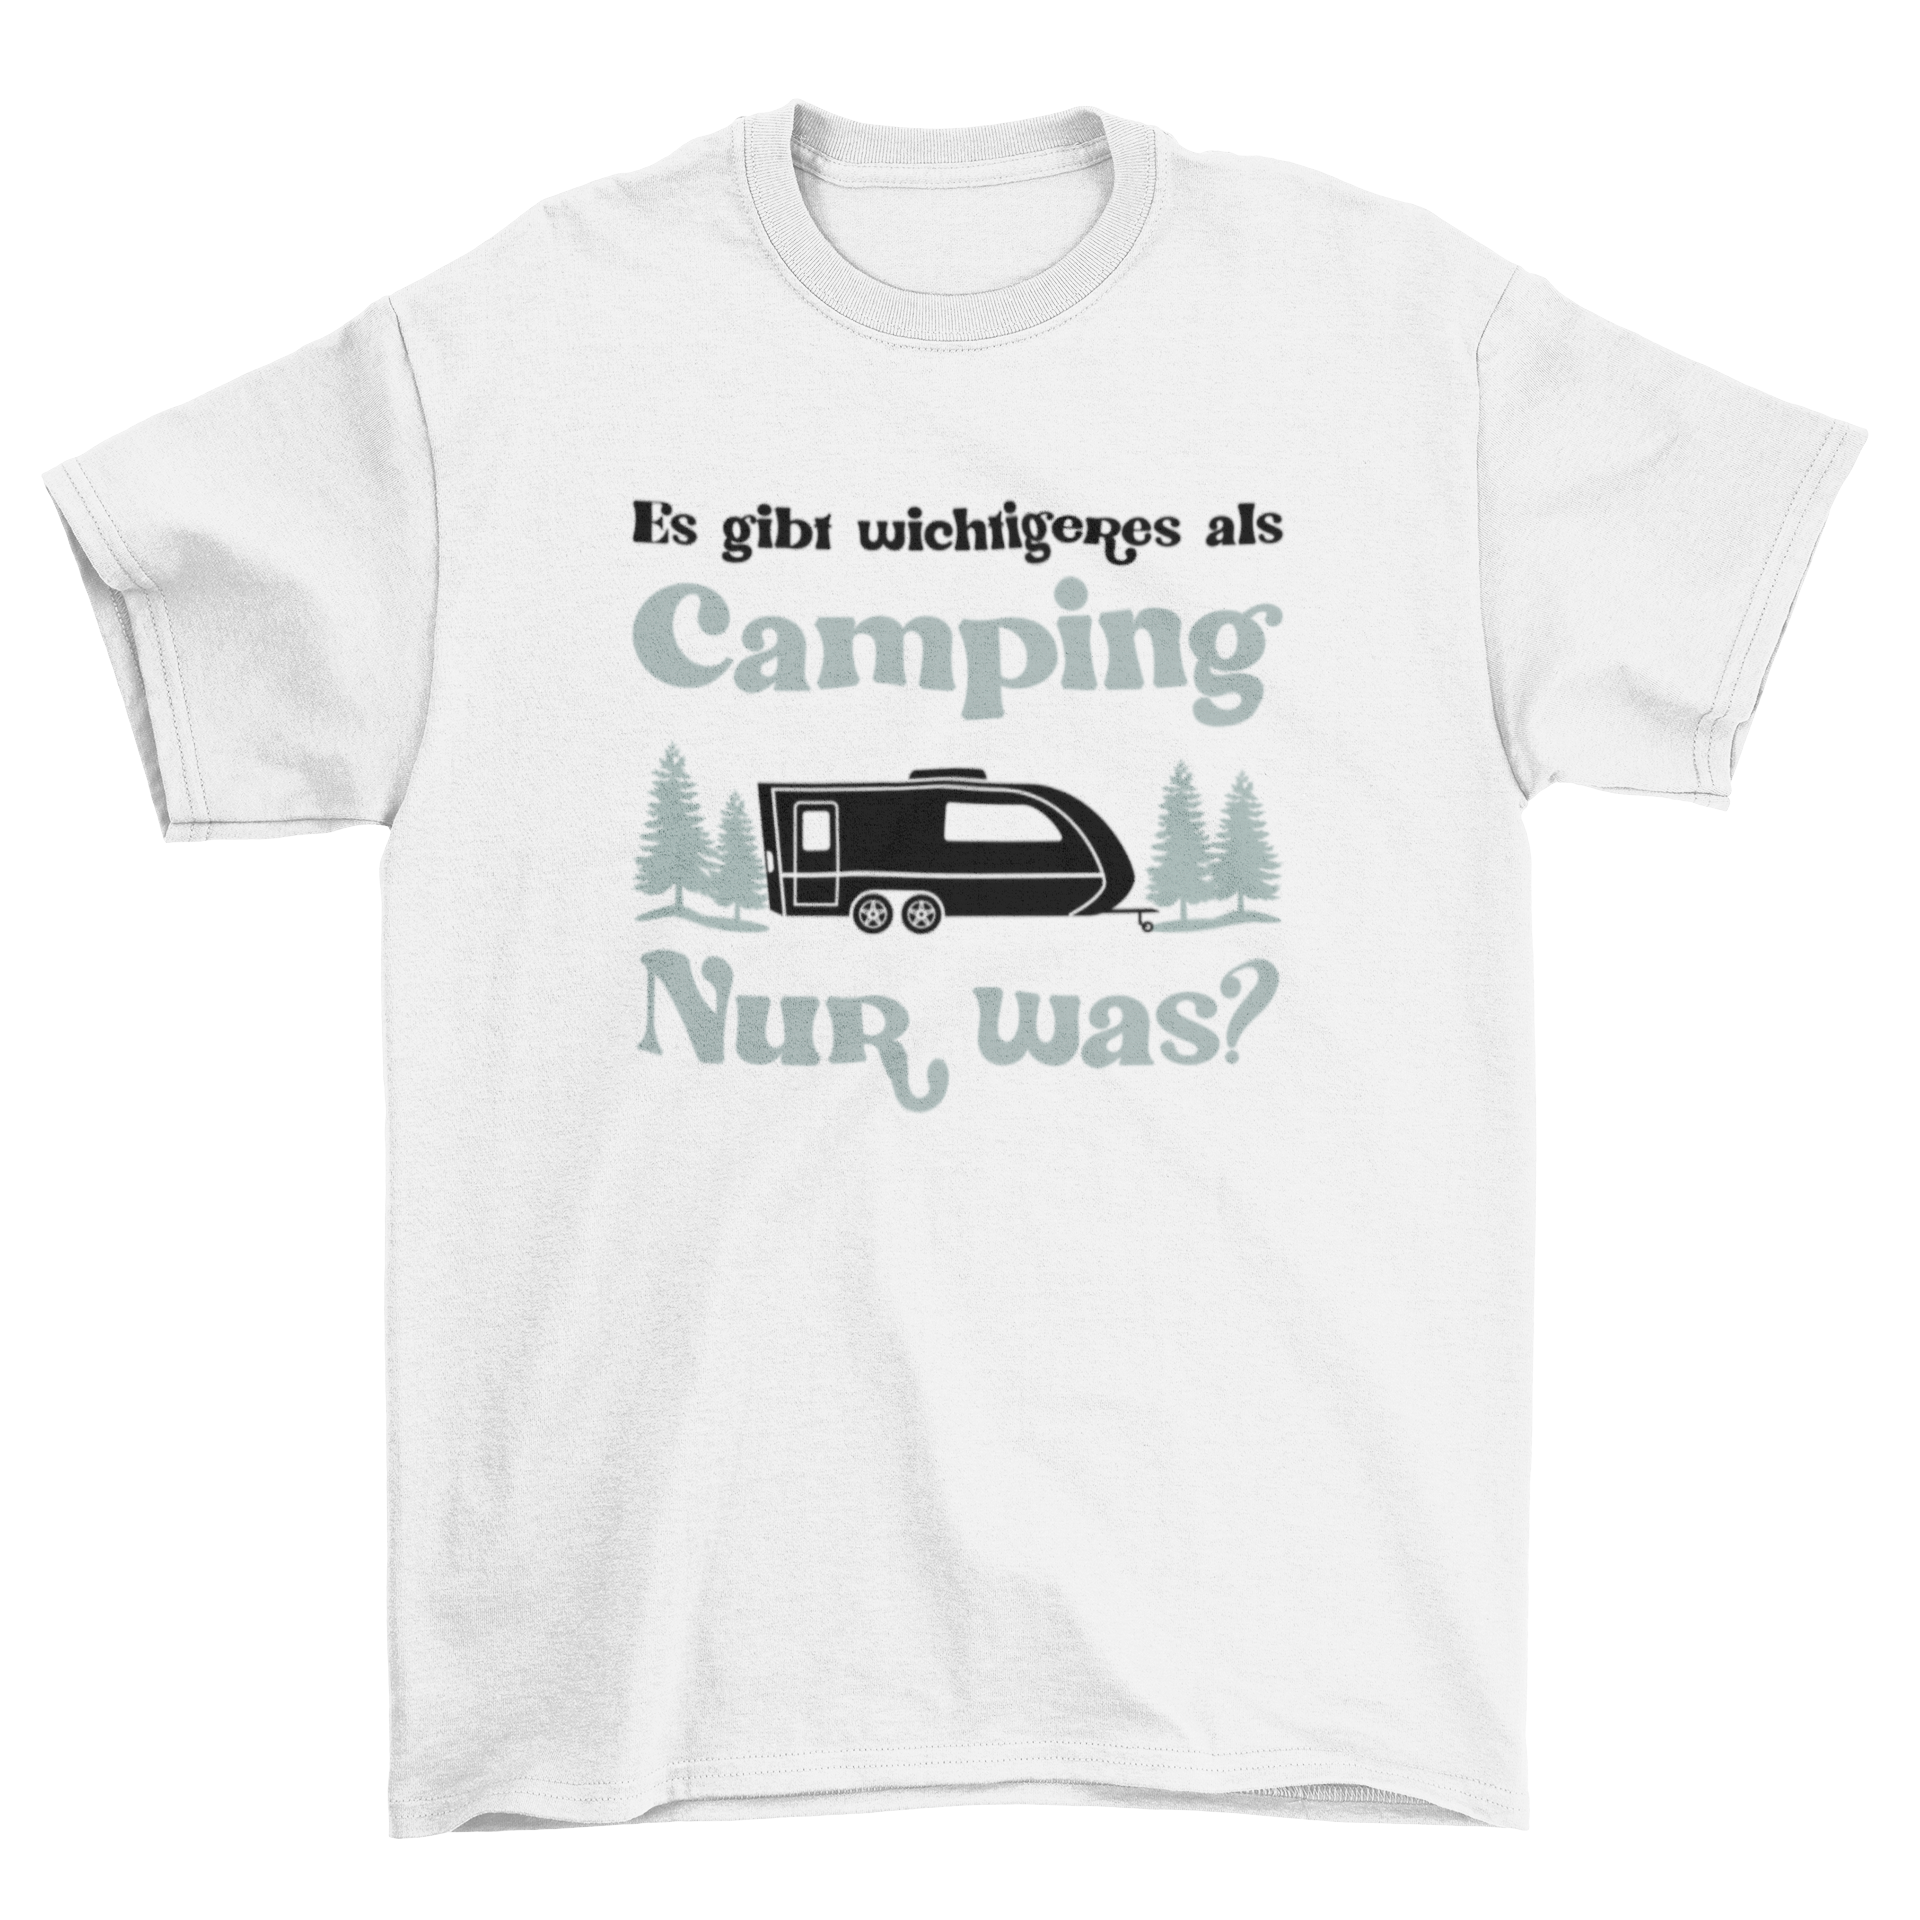 Es gibt wichtigeres als Camping T-Shirt